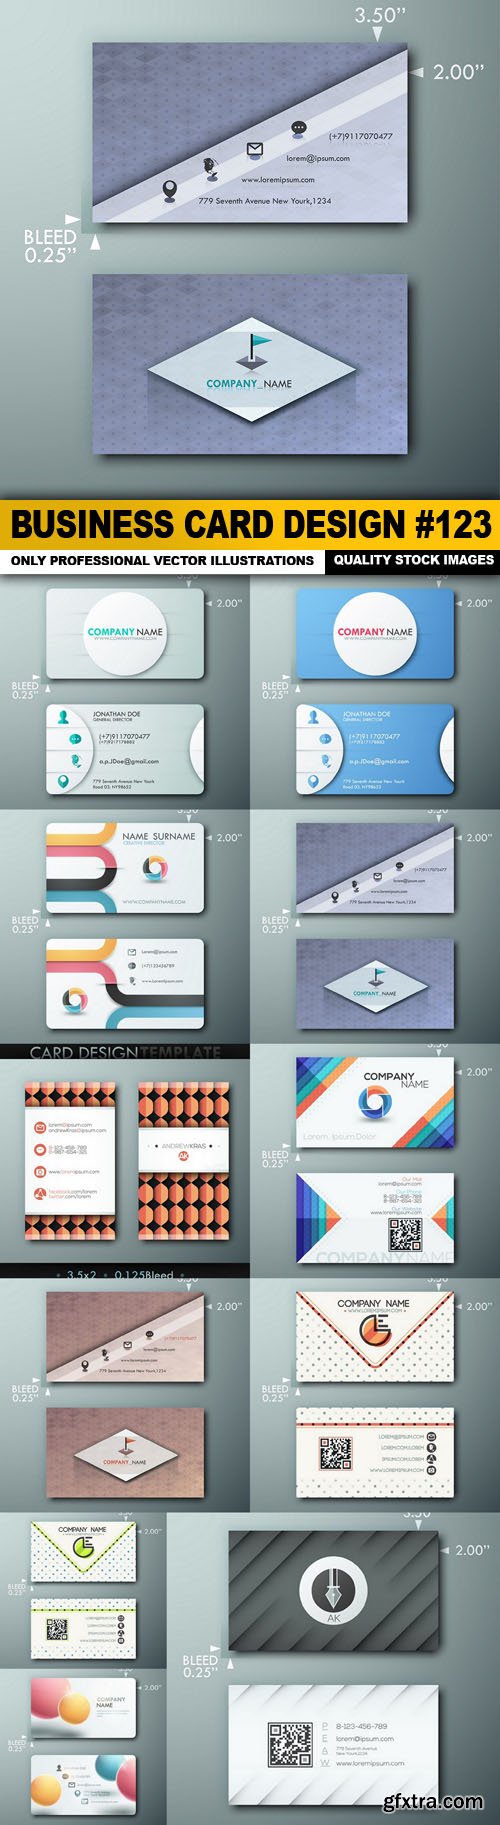 Business Card Design #123 - 11 Vector